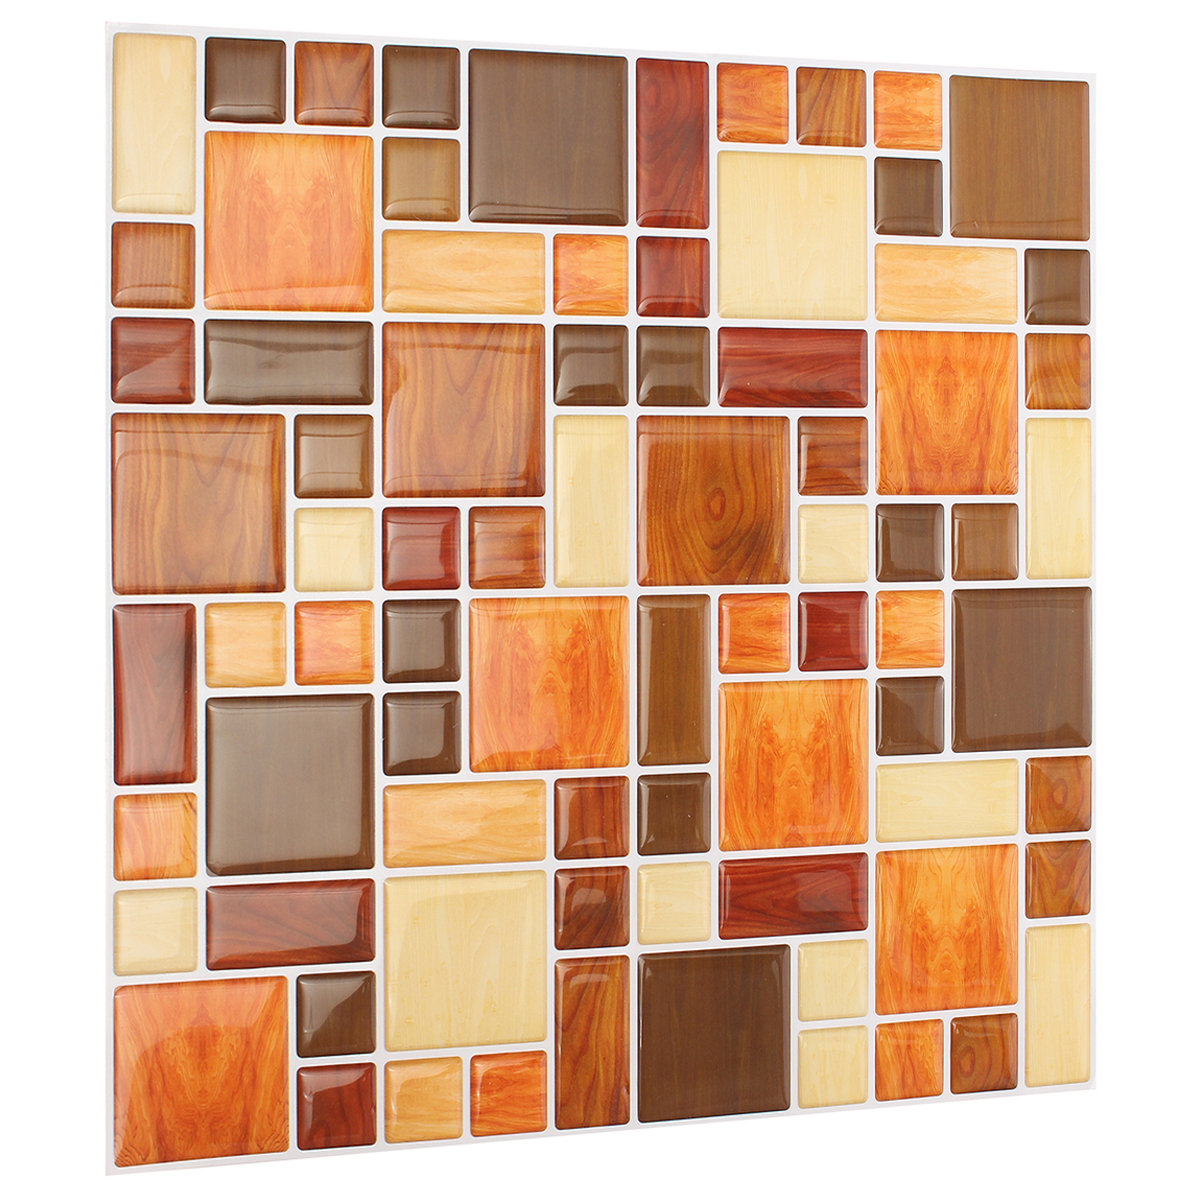 

Brown Creative 3D Mosaic Wall Stickers Backsplash Tile Wallpaper Home Bathroom Kitchen Decor